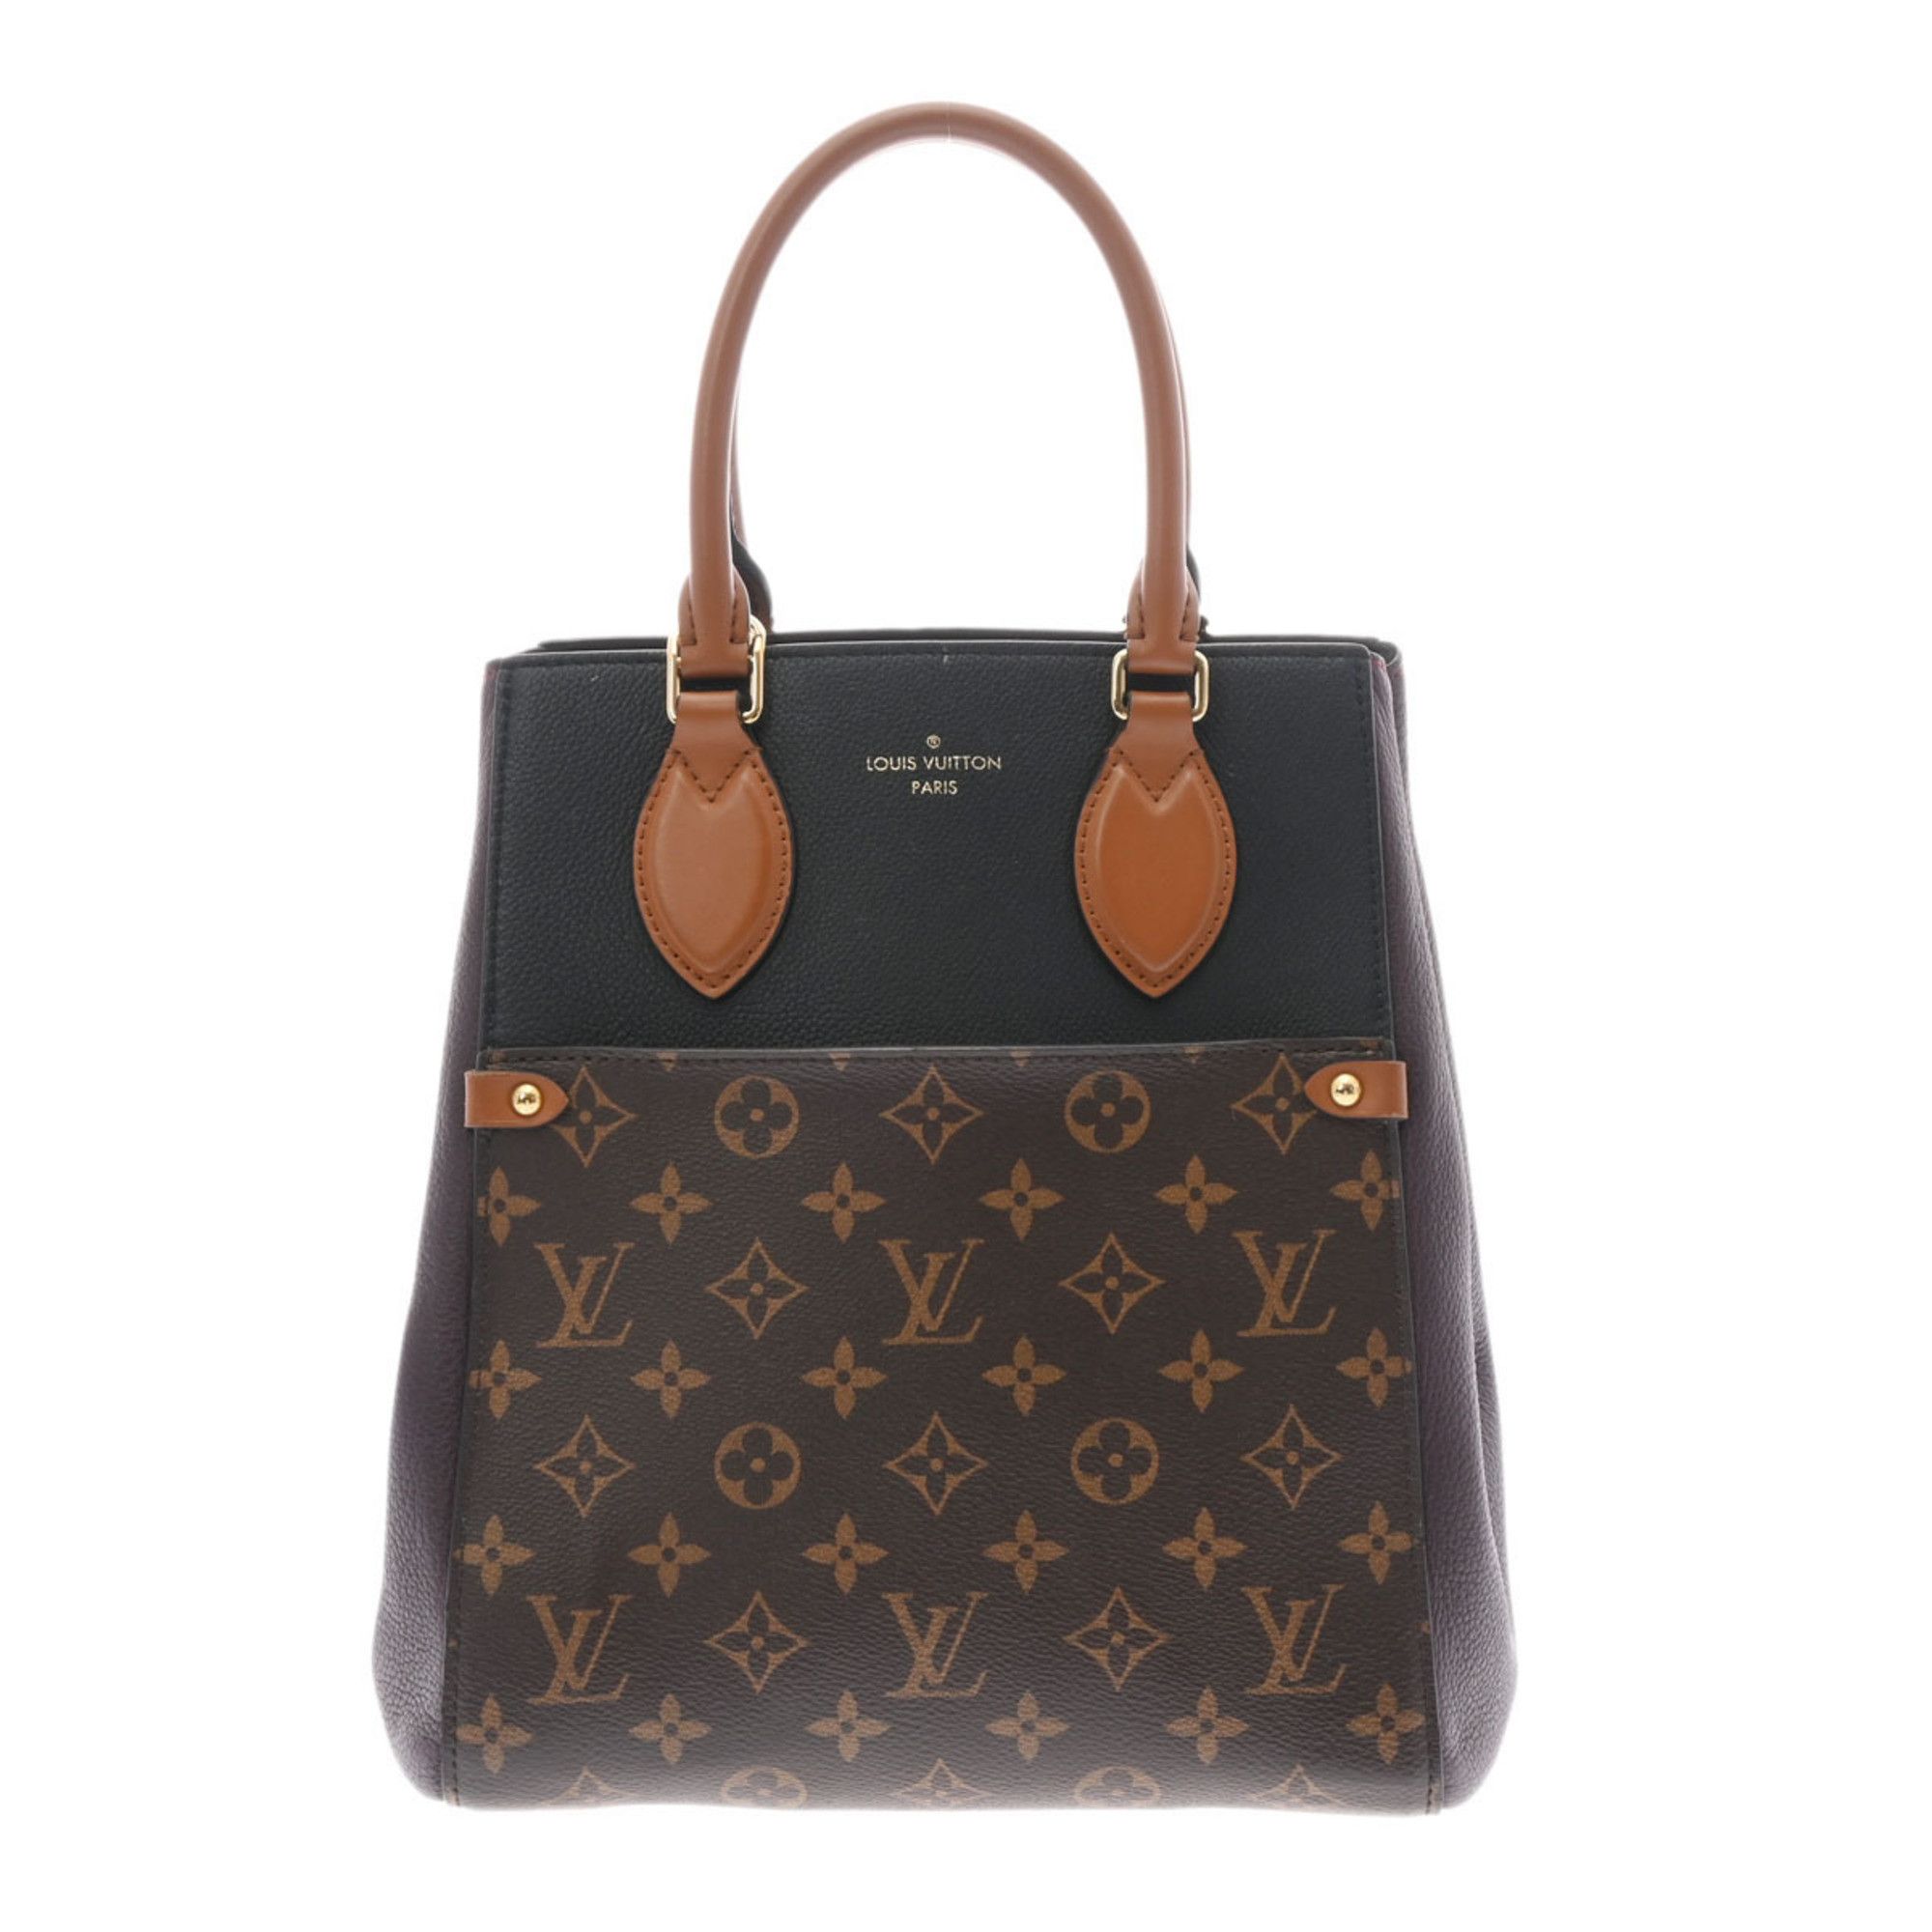 LOUIS VUITTON Louis Vuitton Monogram Fold Tote PM Series Creme Noir M45389  Women's Canvas Bag